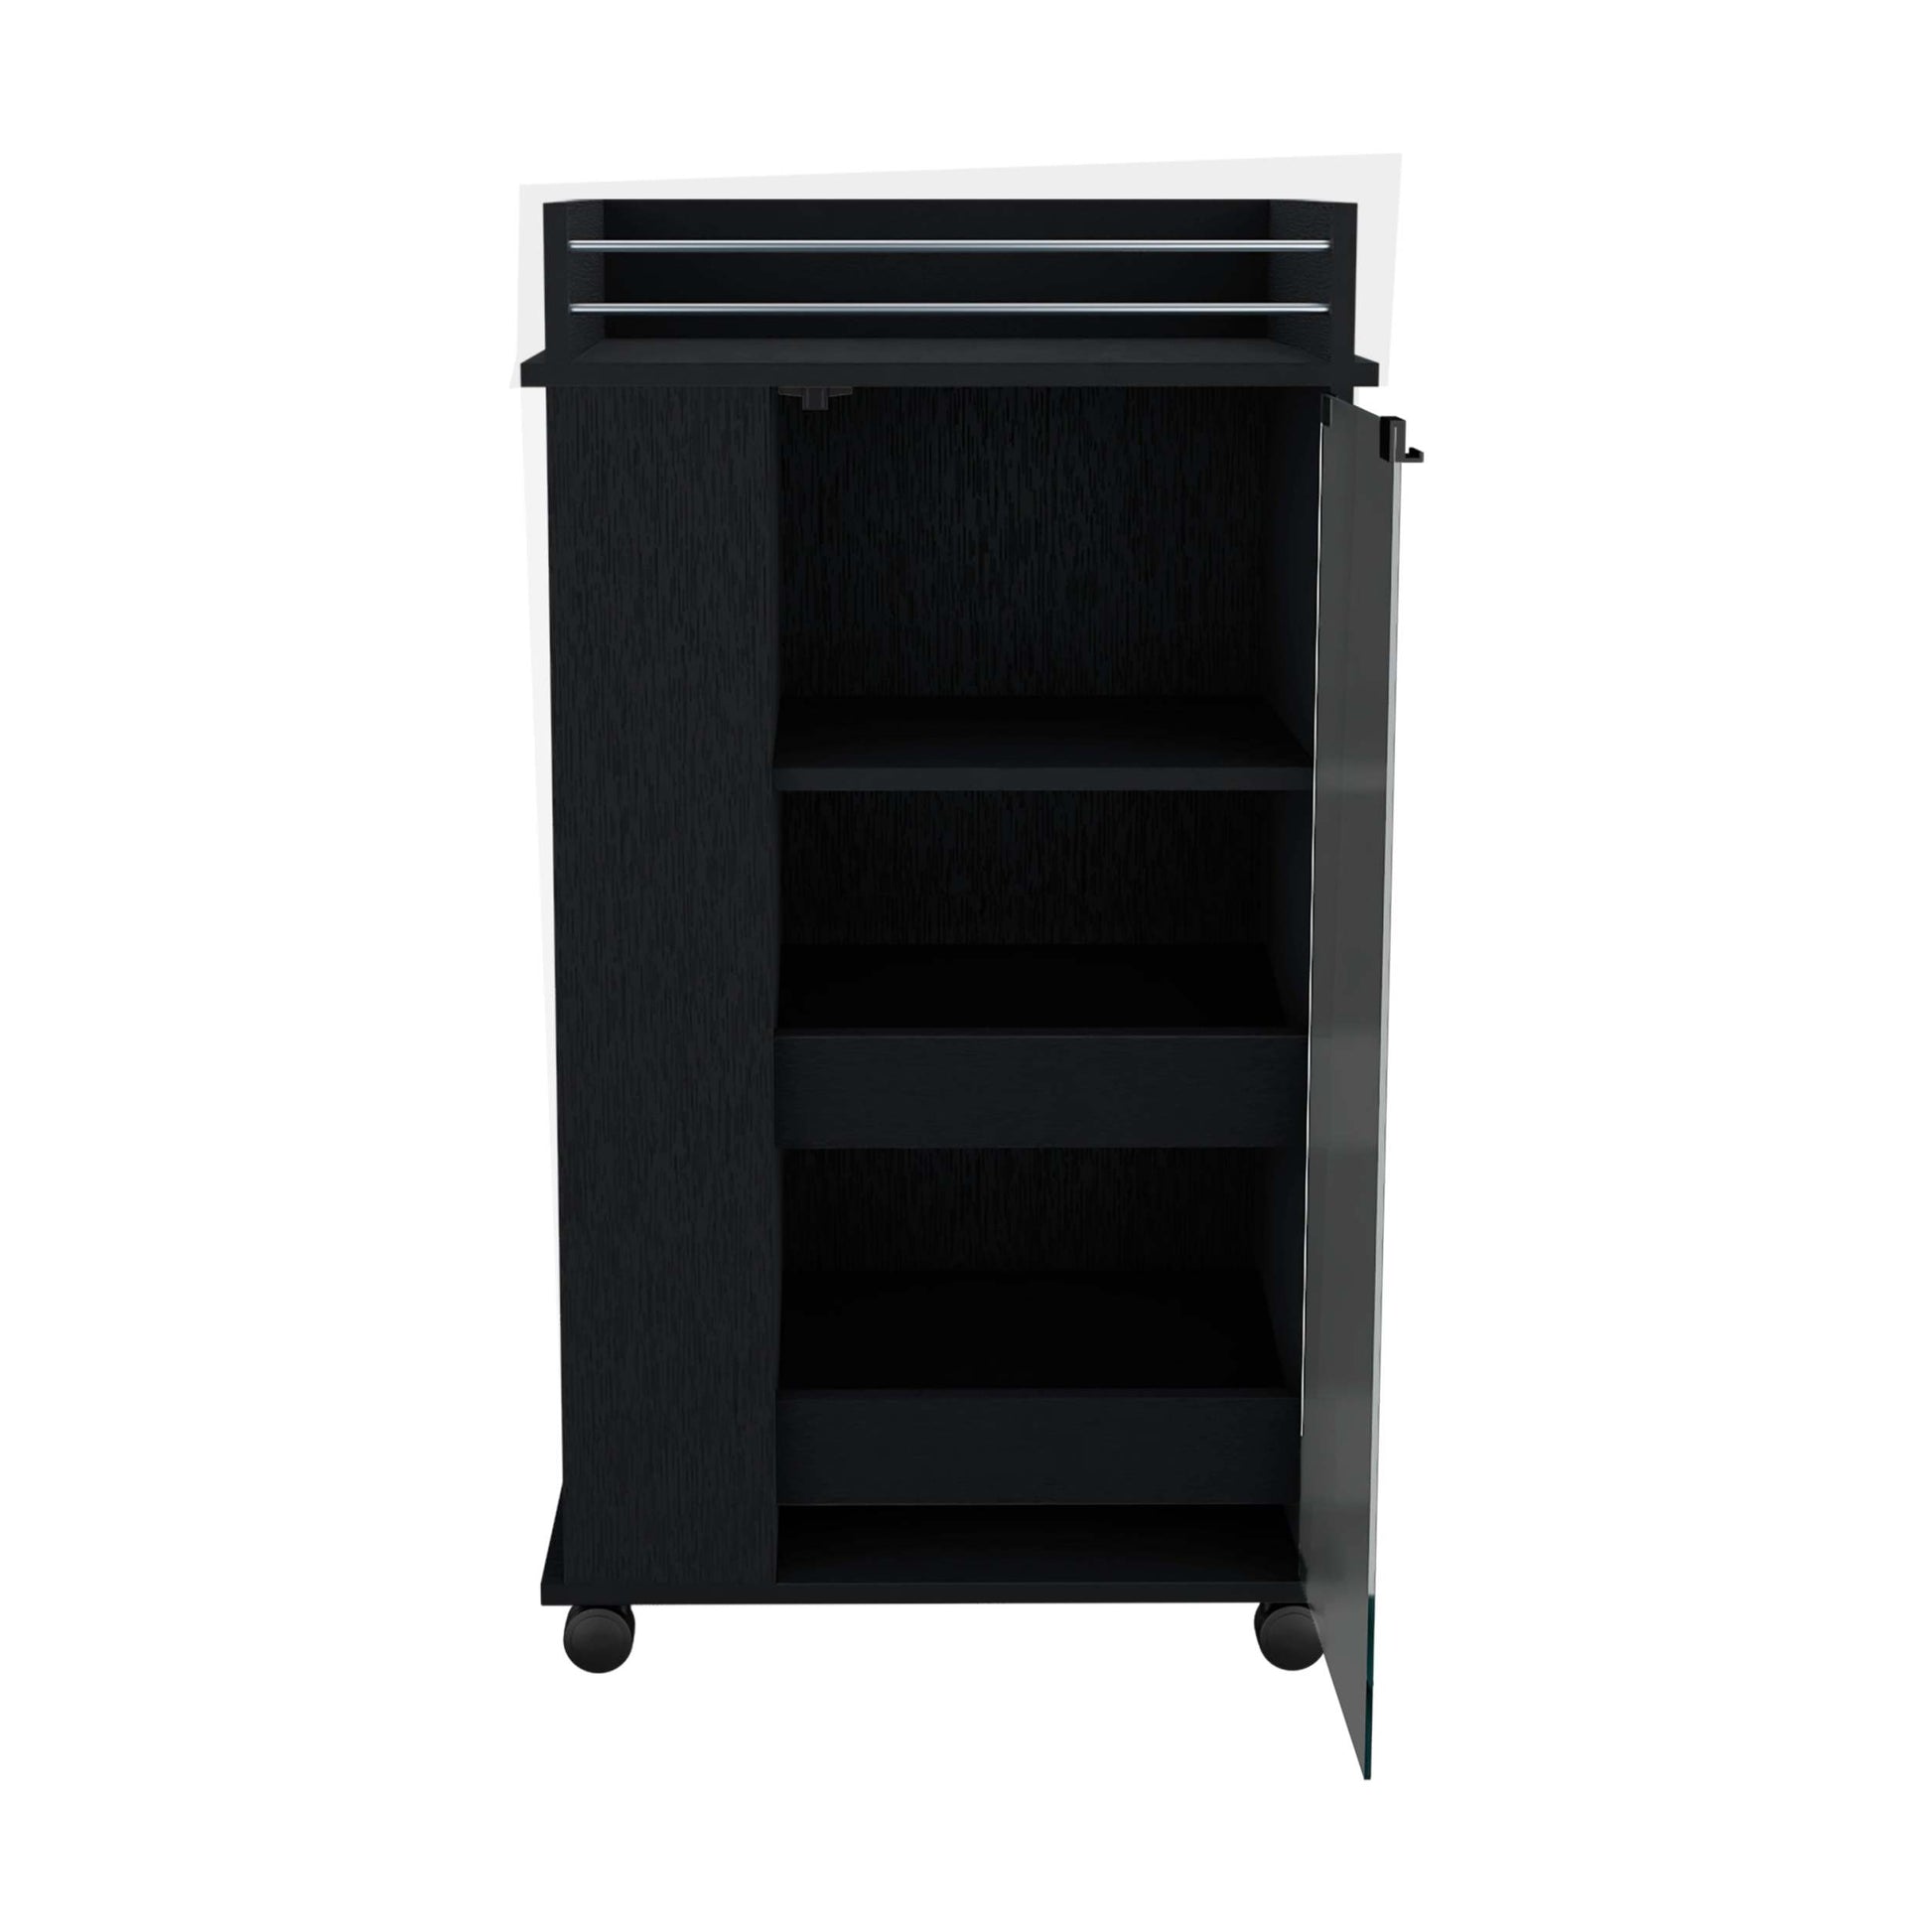 Black Kitchen Cabinet, Bar Cart With Wheels,